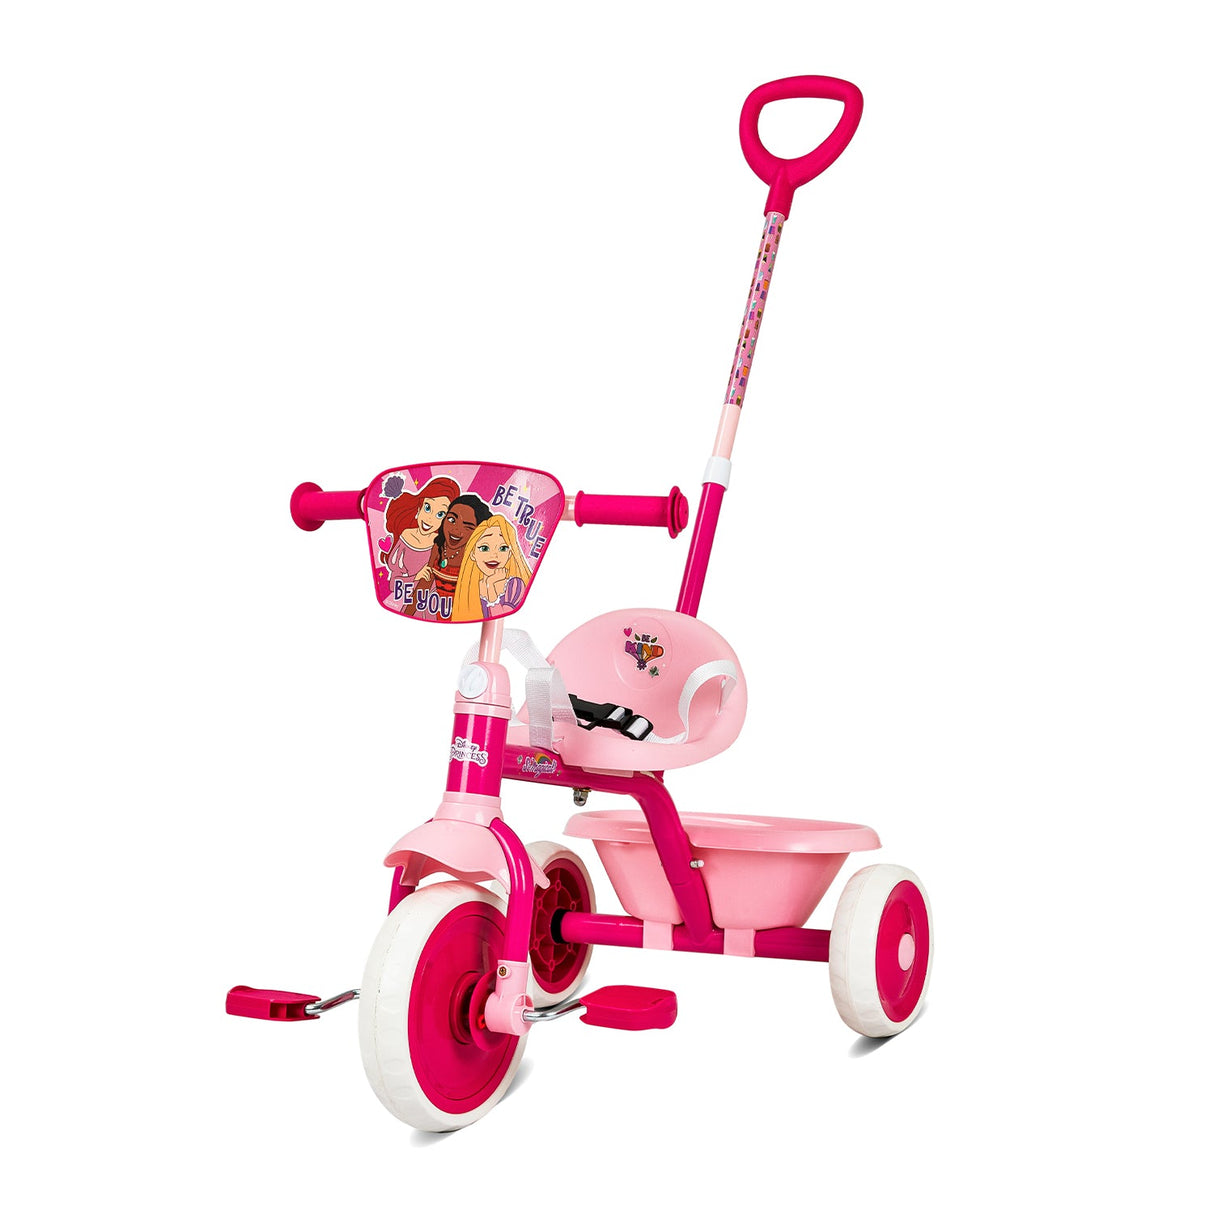 Spartan Disney Princess Tricycle with Pushbar